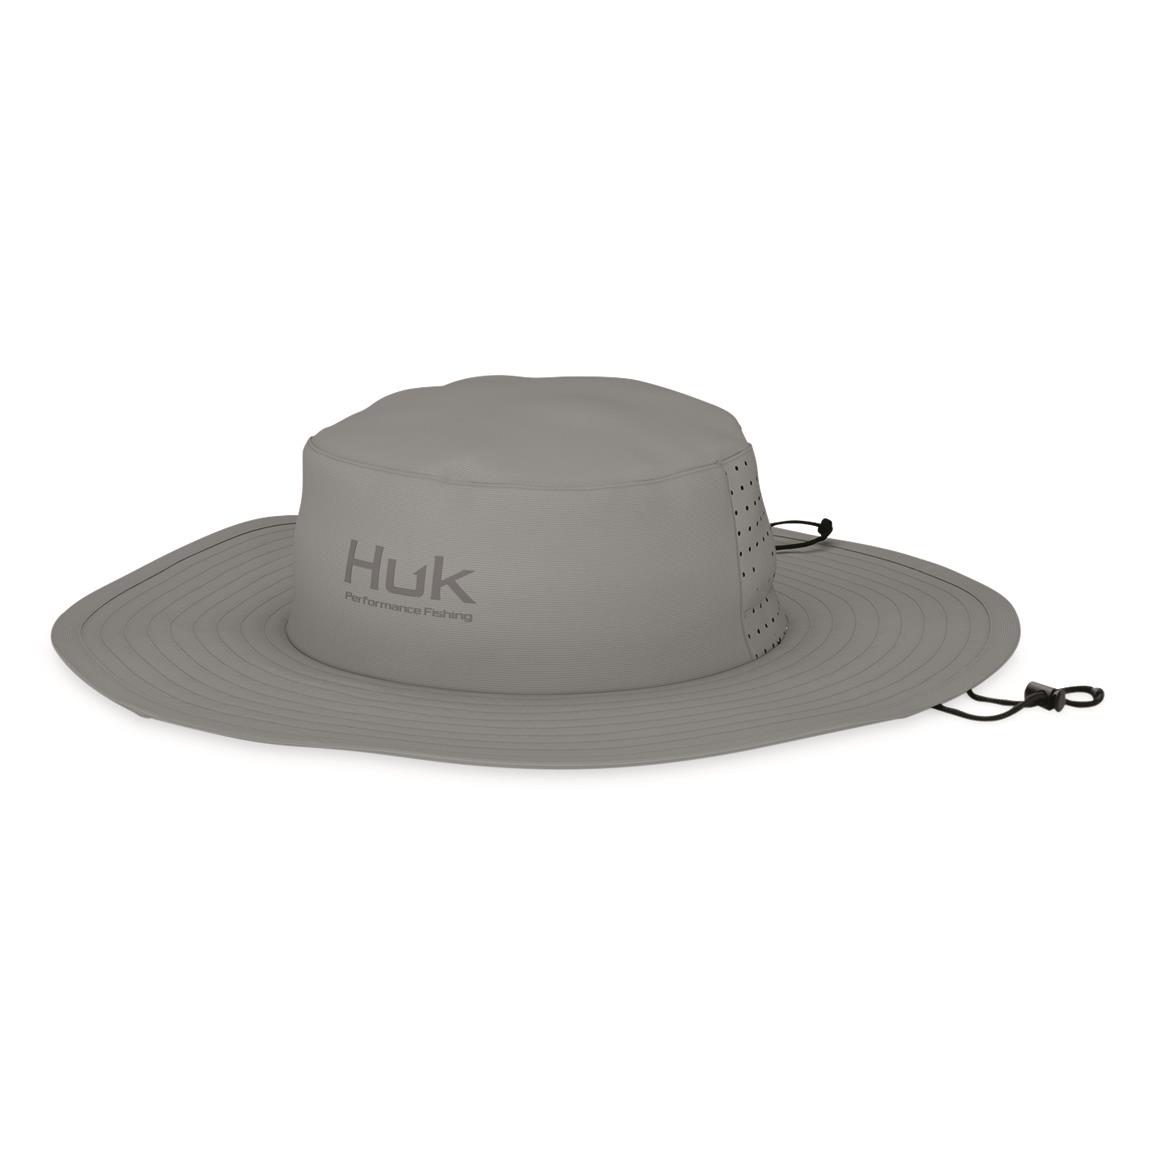 Huk Solid Boonie Hat, Harbor Mist